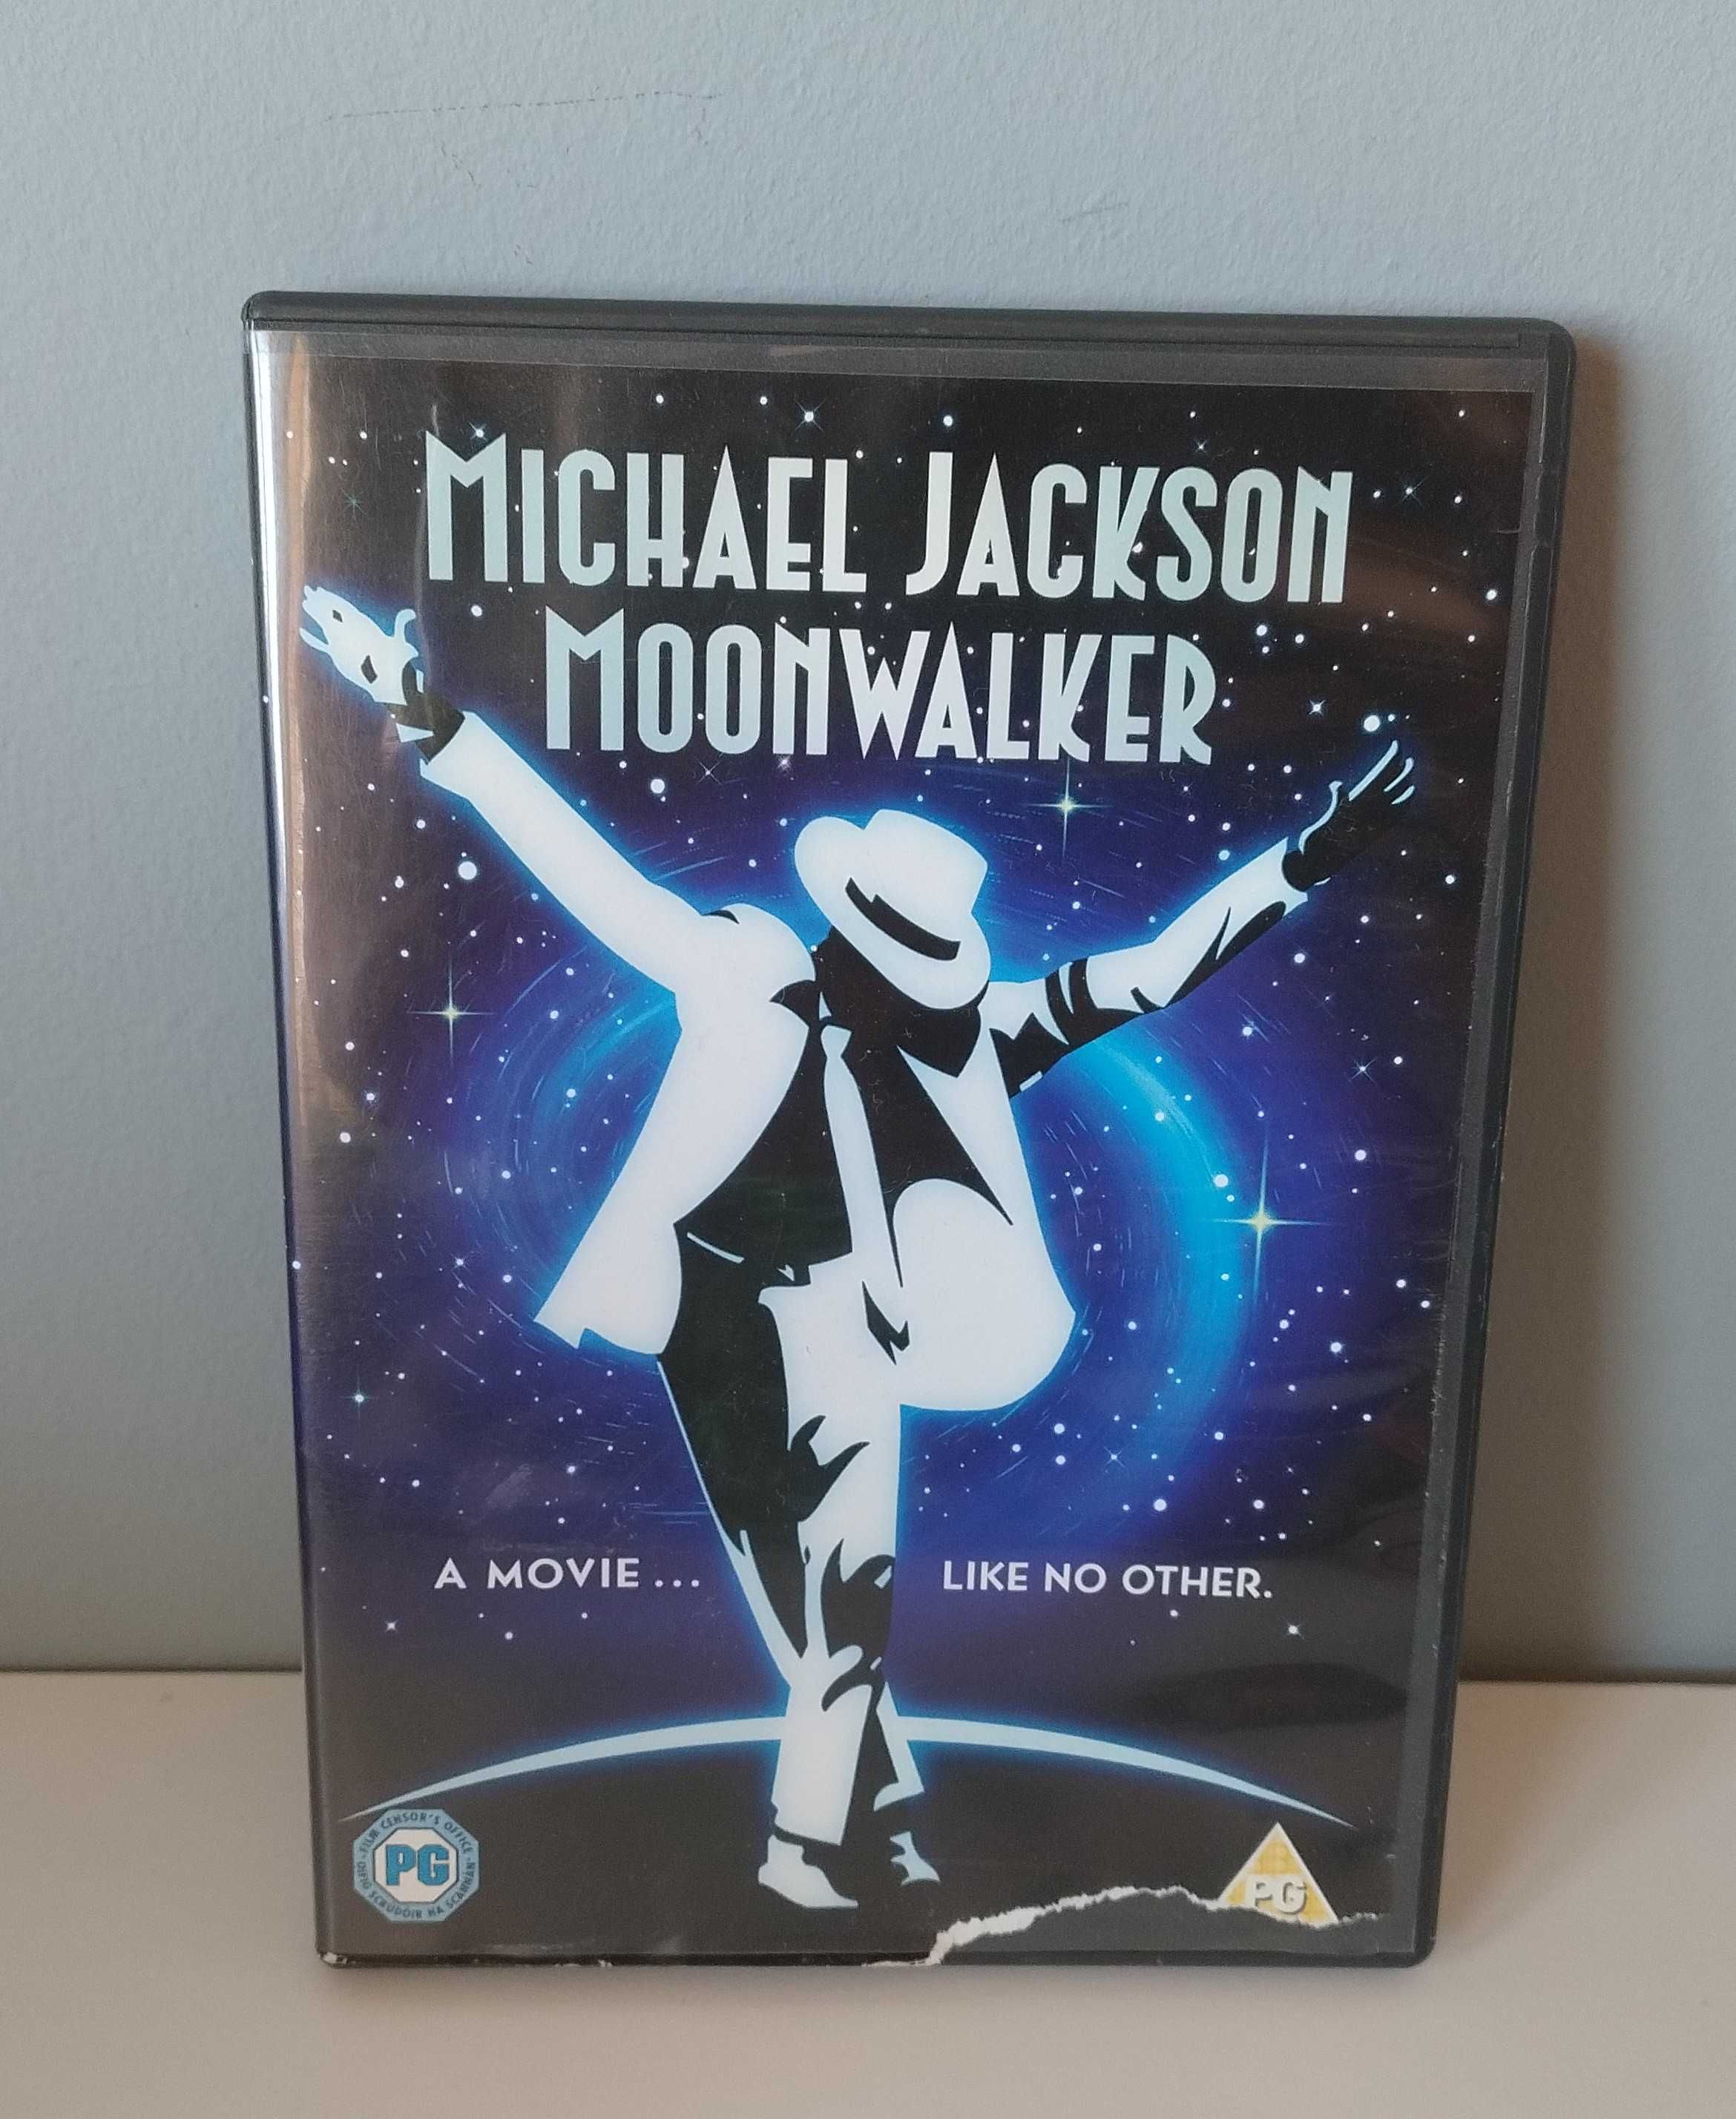 Michael Jackson Moonwalker DVD